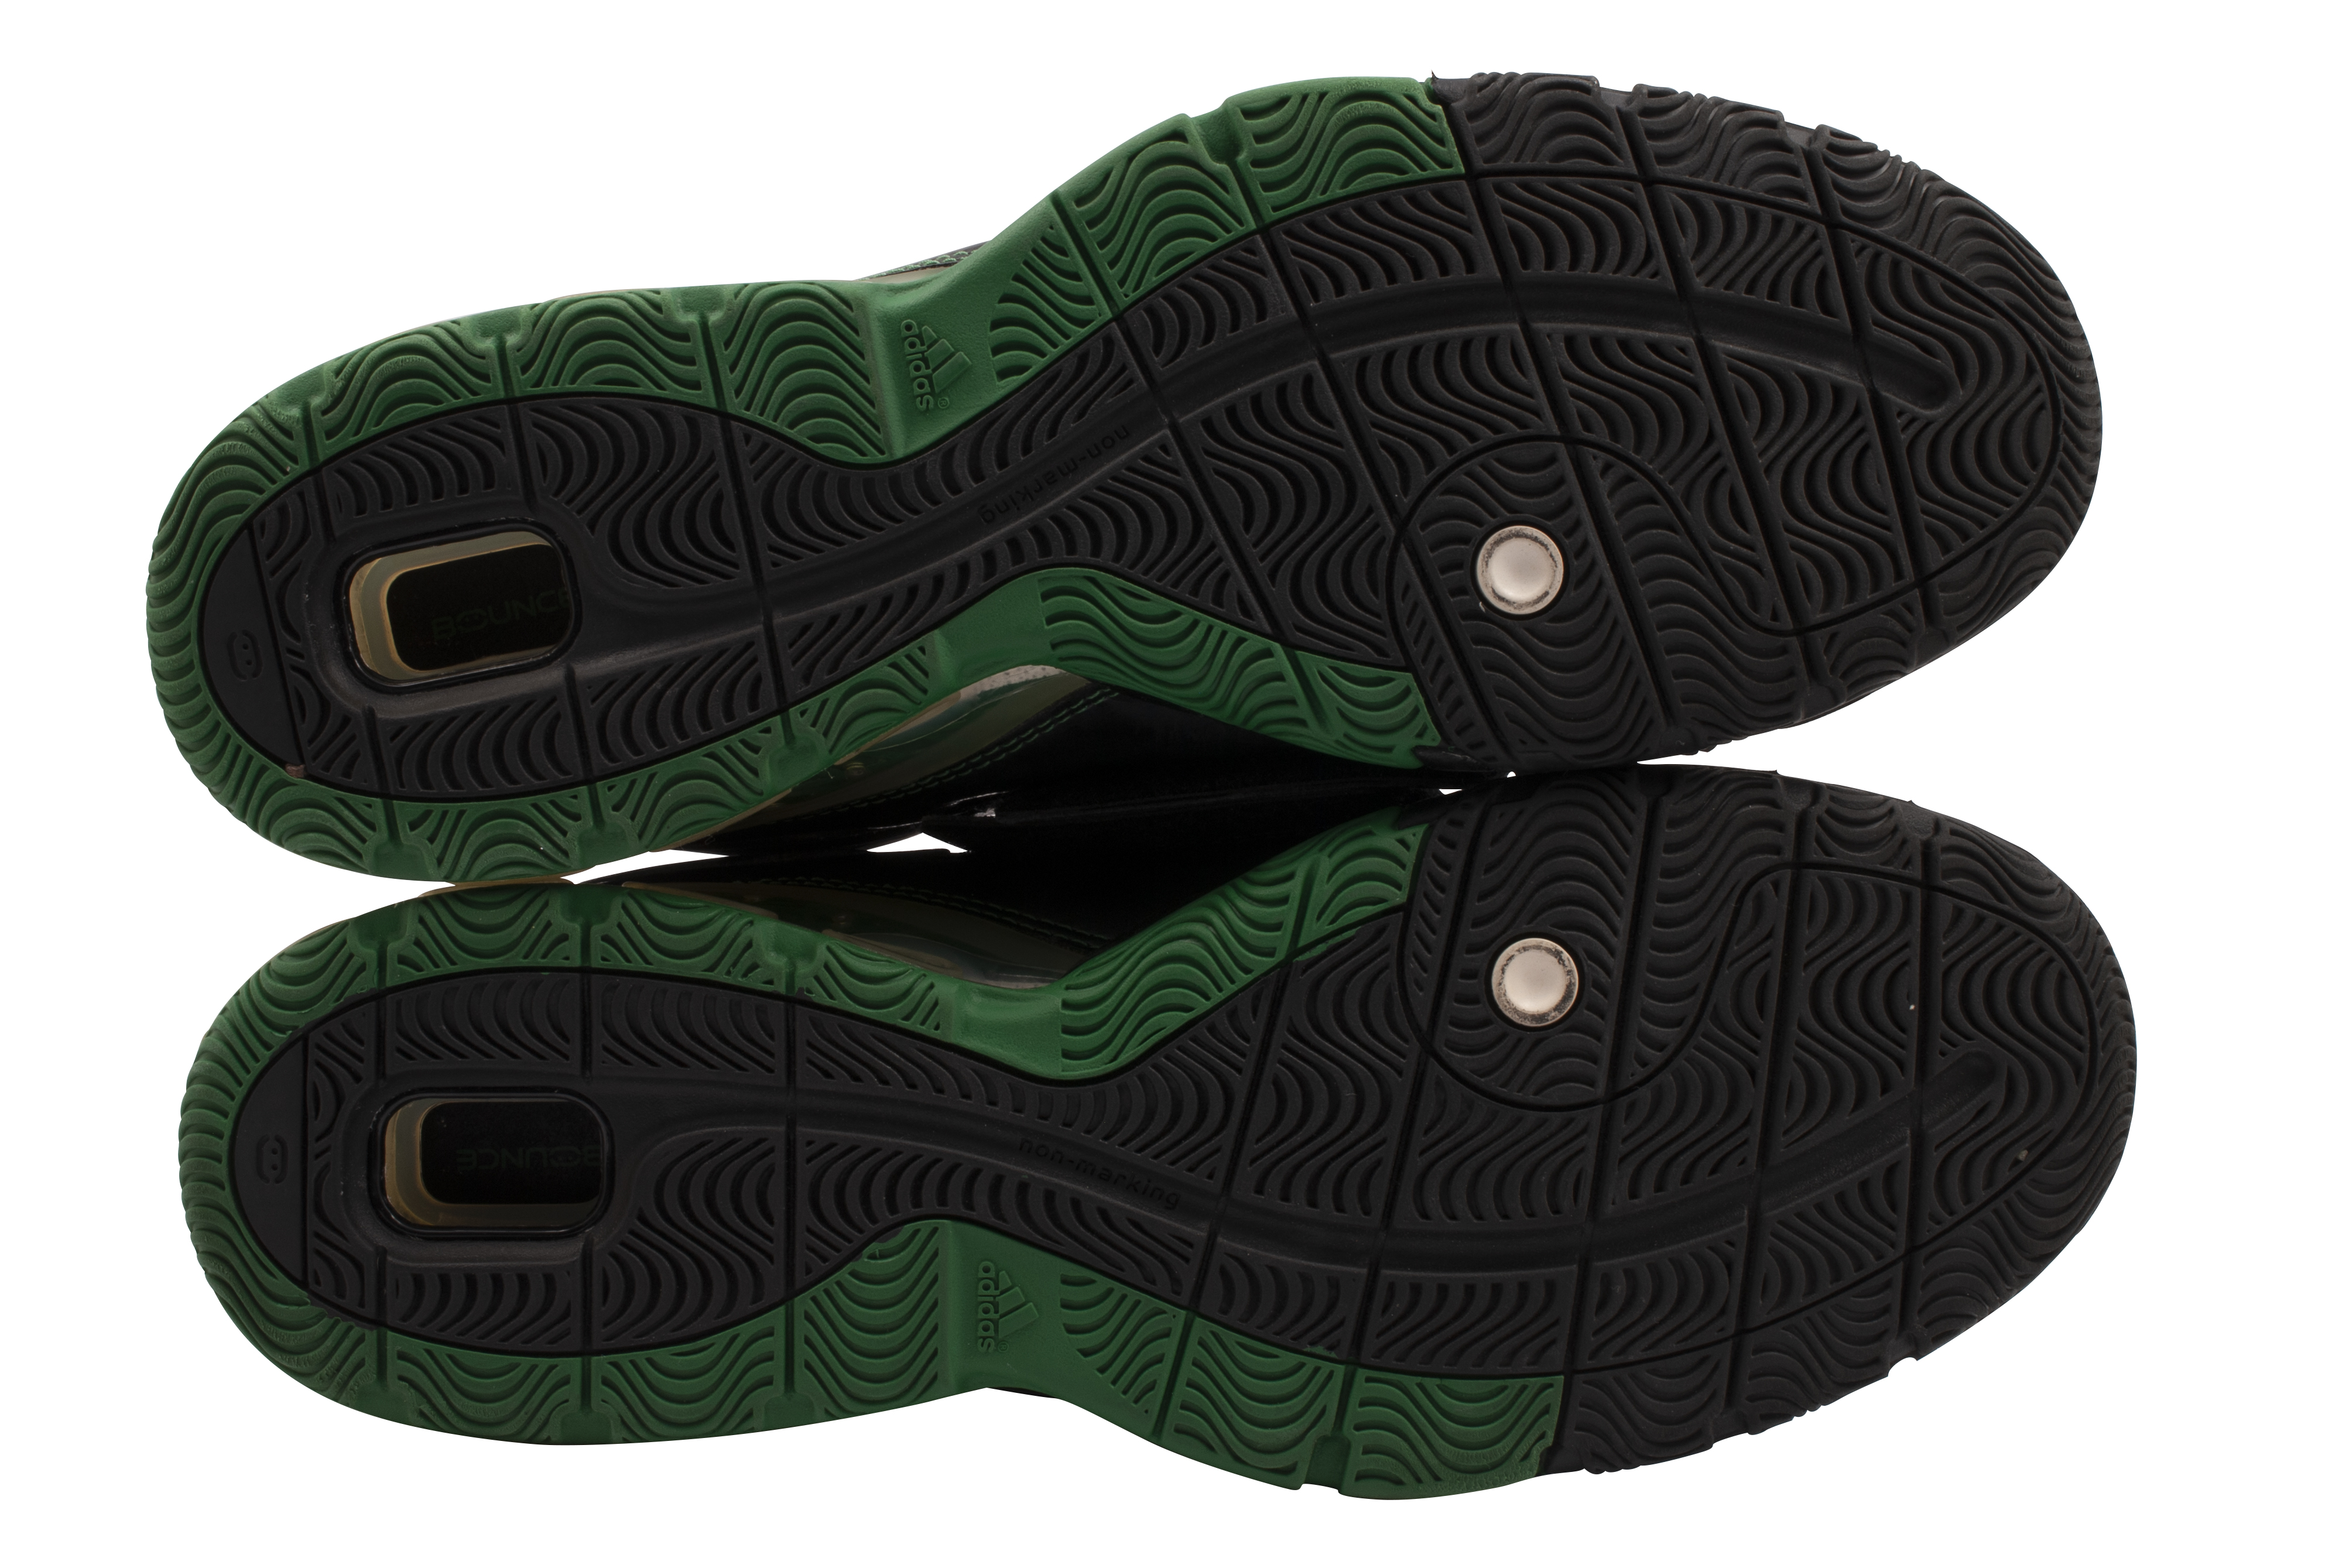 Adidas-Kevin Garnett  Adidas shoes, Sneaker head, Sneakers